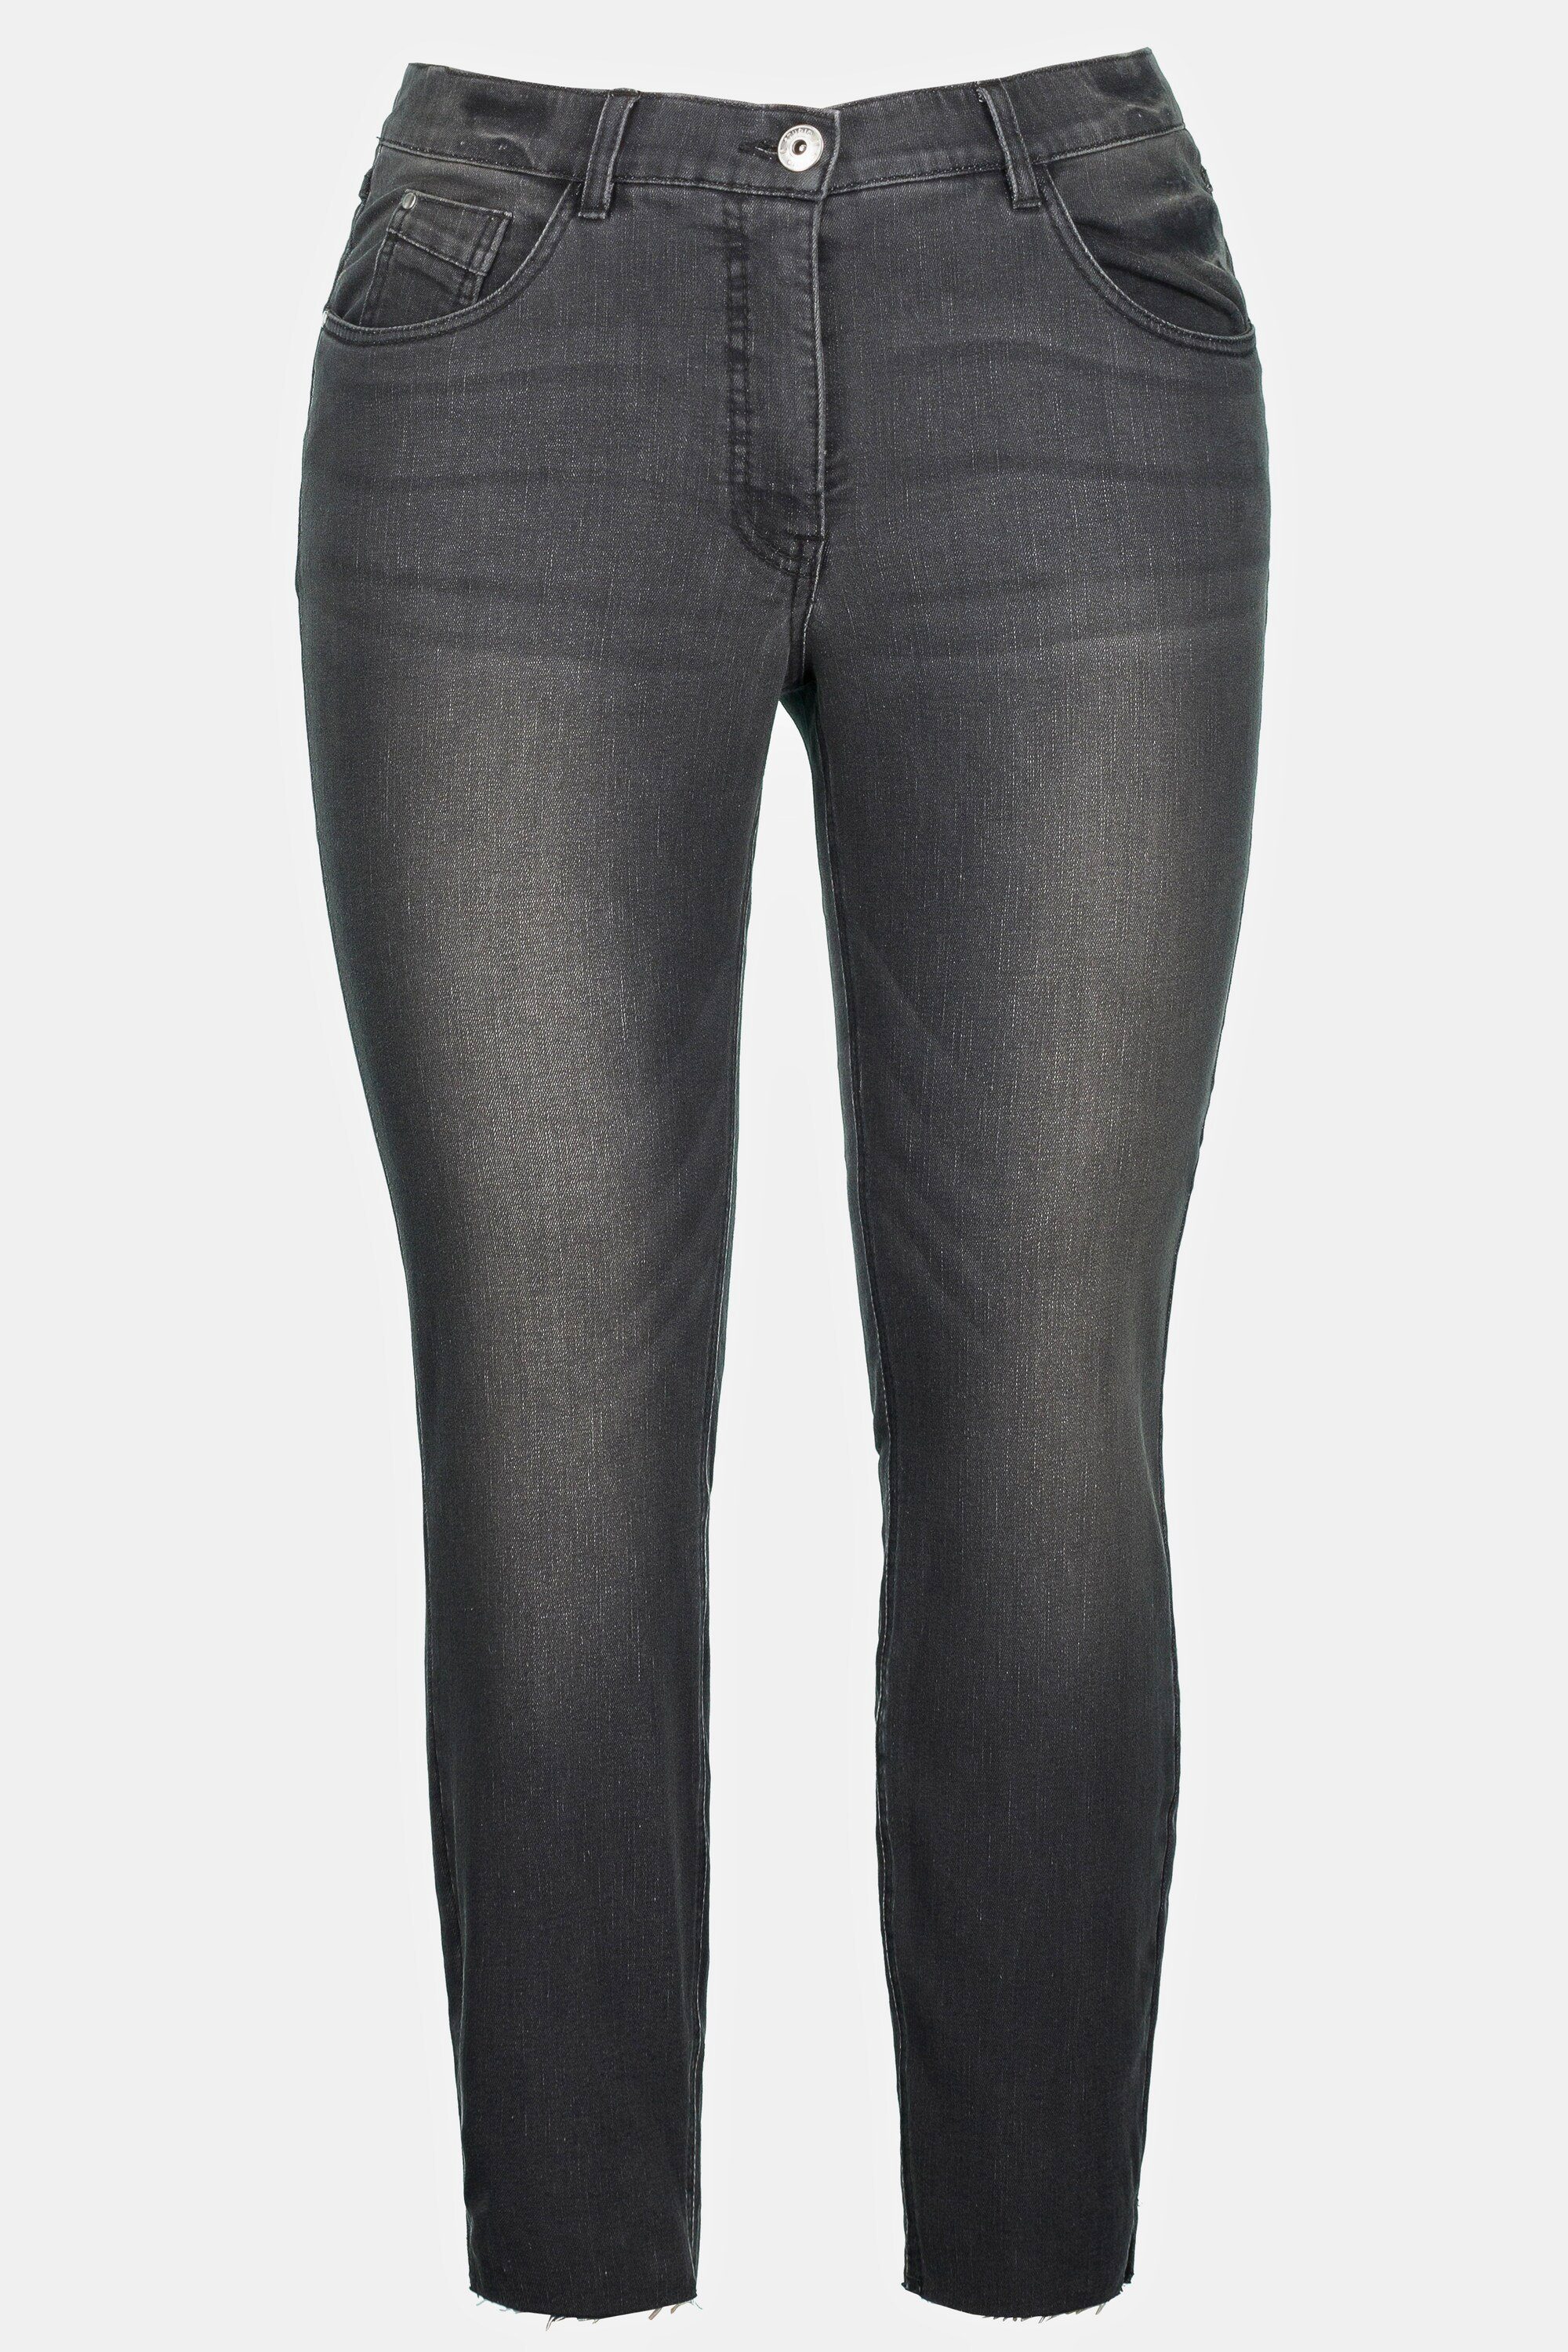 Schlupfhose Fransensaum 5-Pocket denim Untold Studio Jeans schmal grey Skinny Schlitz